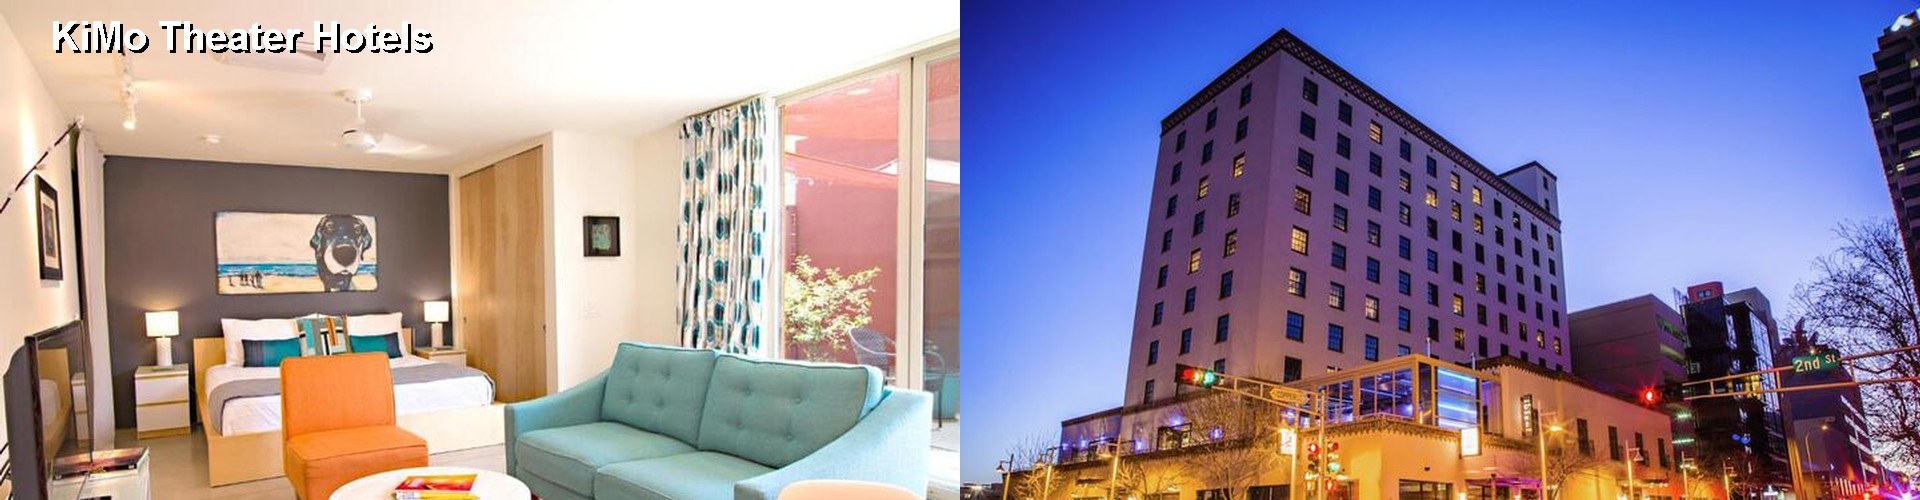 5 Best Hotels near KiMo Theater